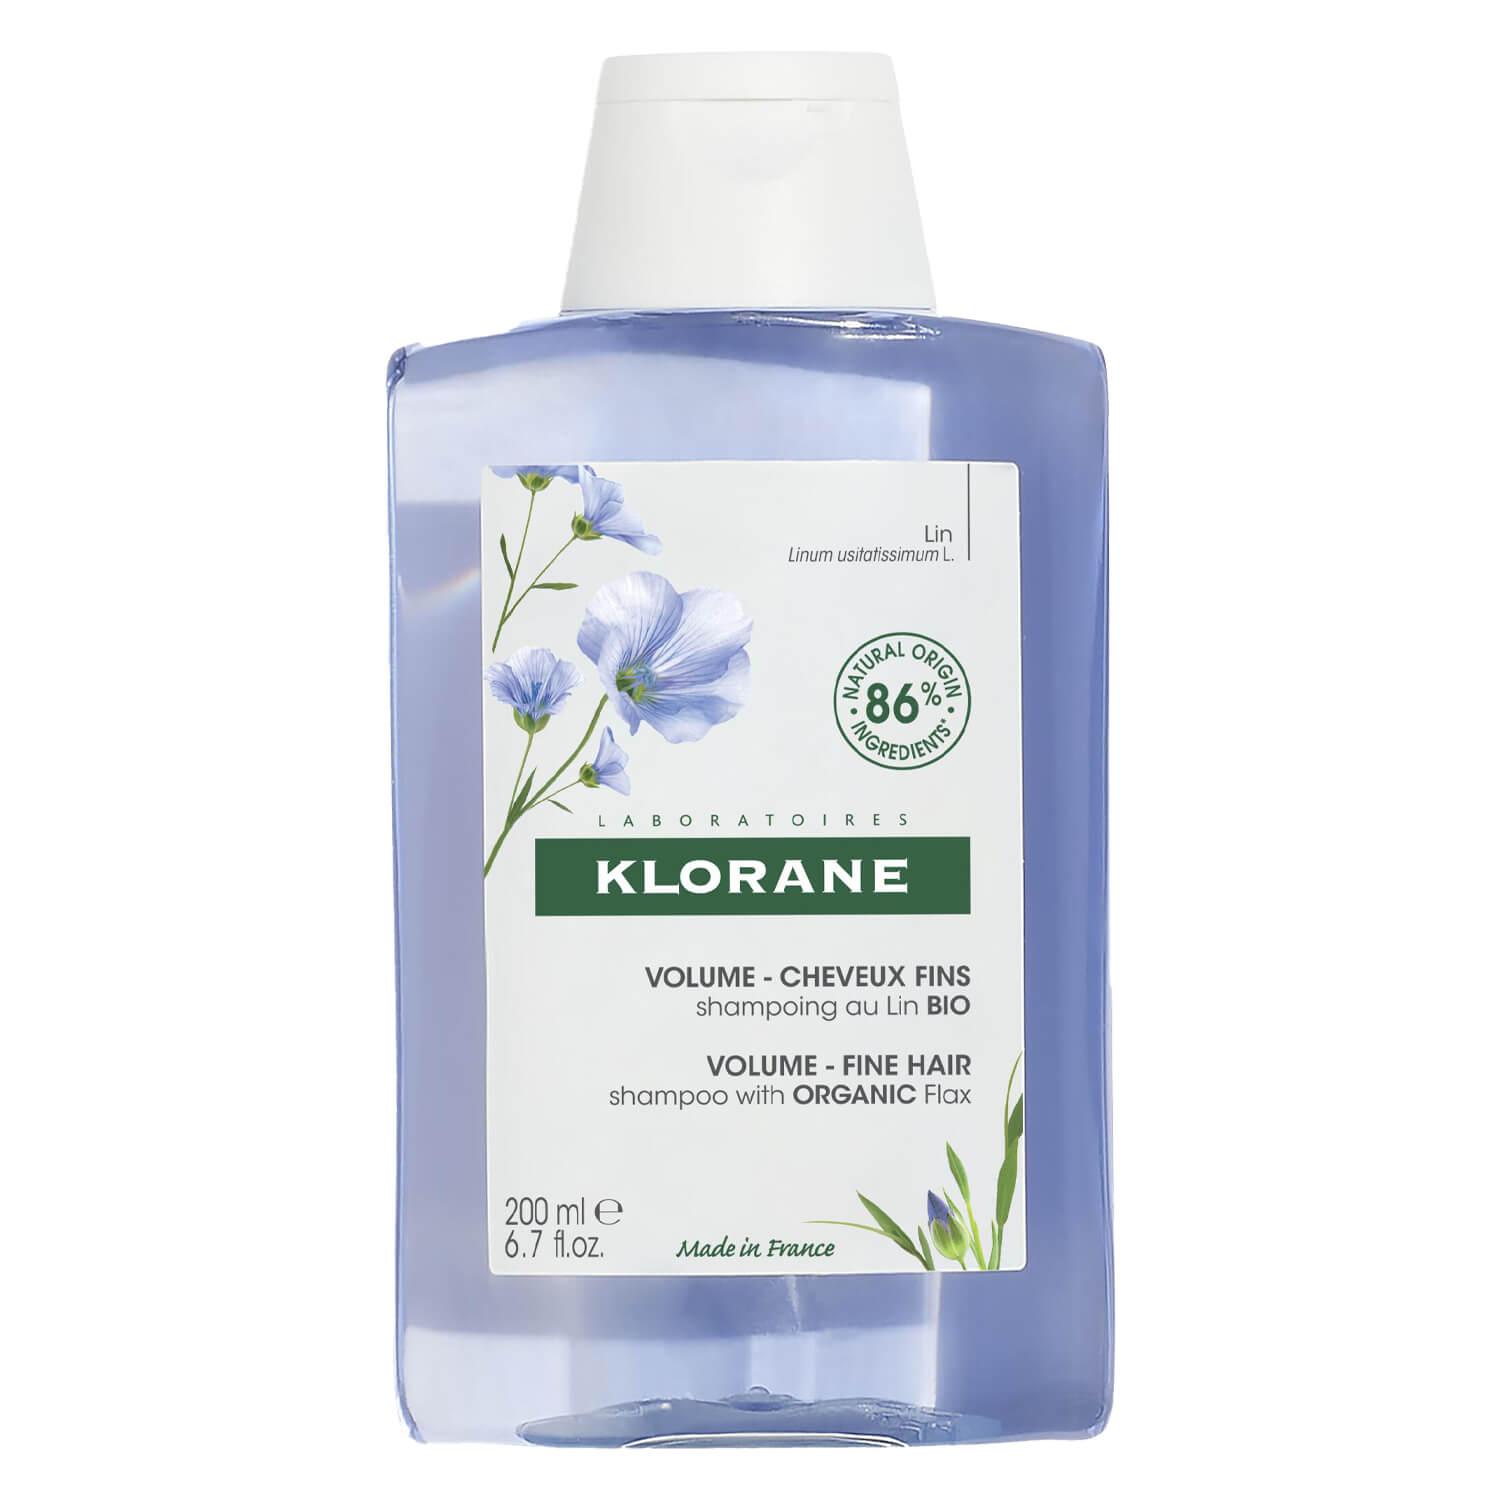 KLORANE Hair - Volume Shampoo Flax Fiber